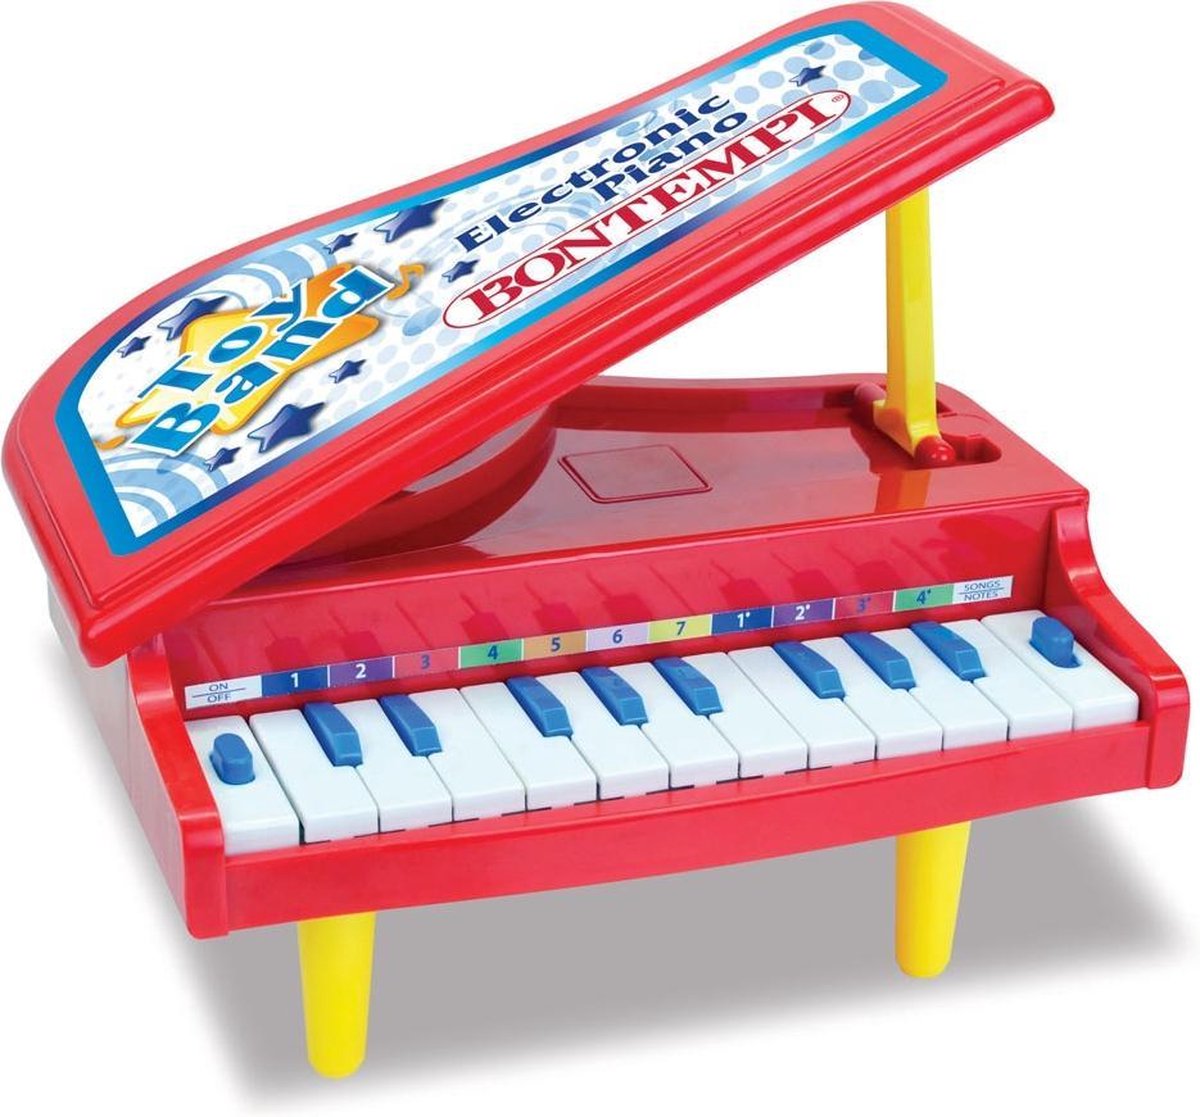 Bontempi elektronische piano 11 toetsen 21,5 cm - Rood